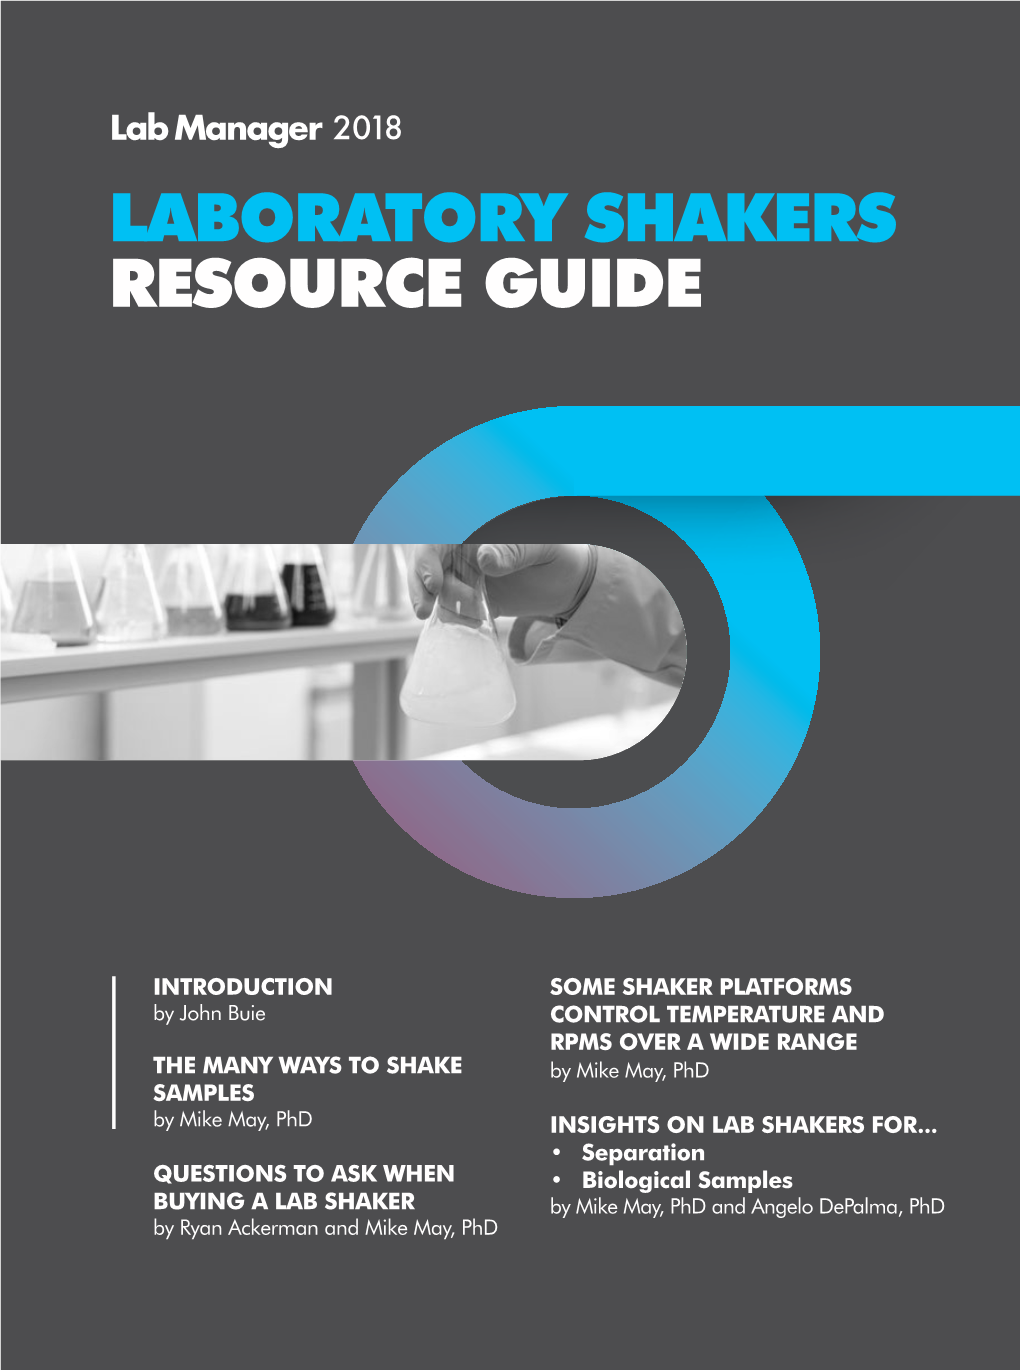 Laboratory Shakers Resource Guide 2018 Laboratory Shakers Resource Guide